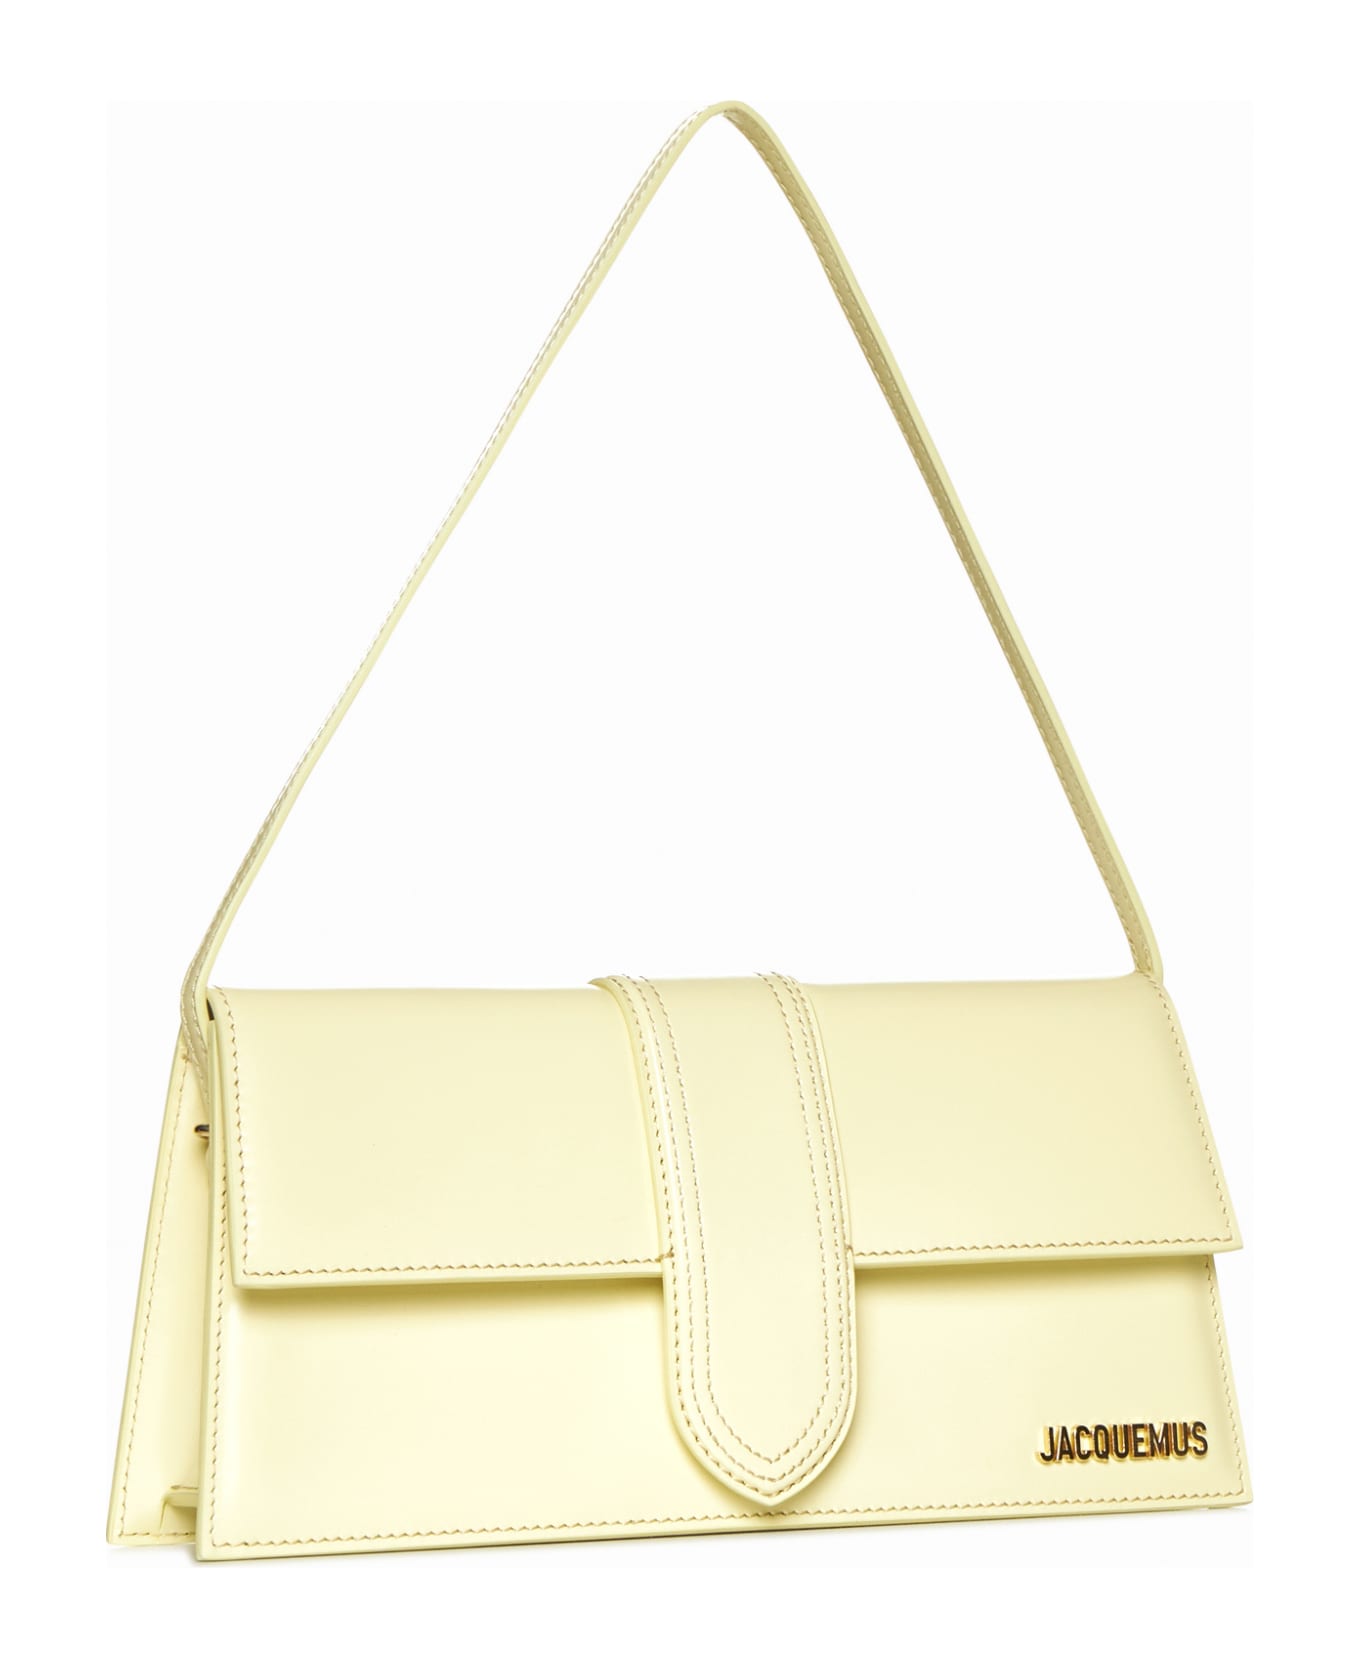 Jacquemus Le Bambino Flap Shoulder Bag - Pale yellow